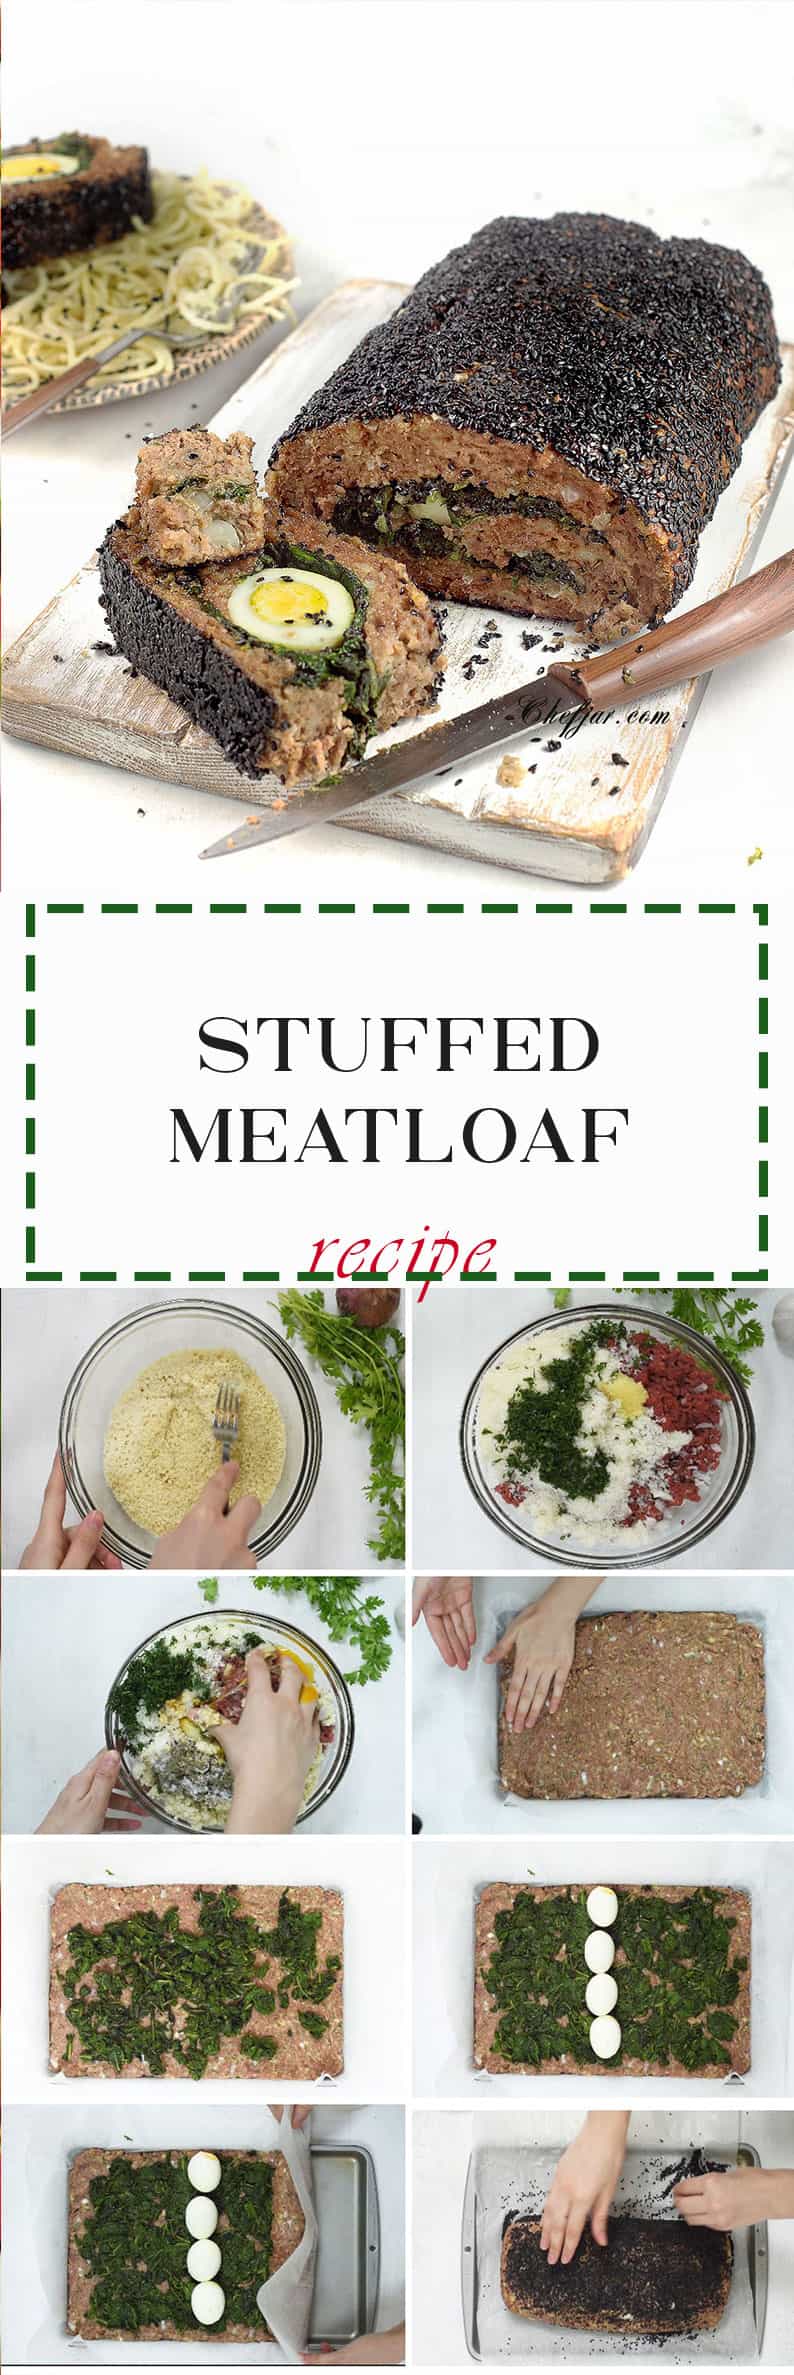 stuffed-meatloaf-recipe